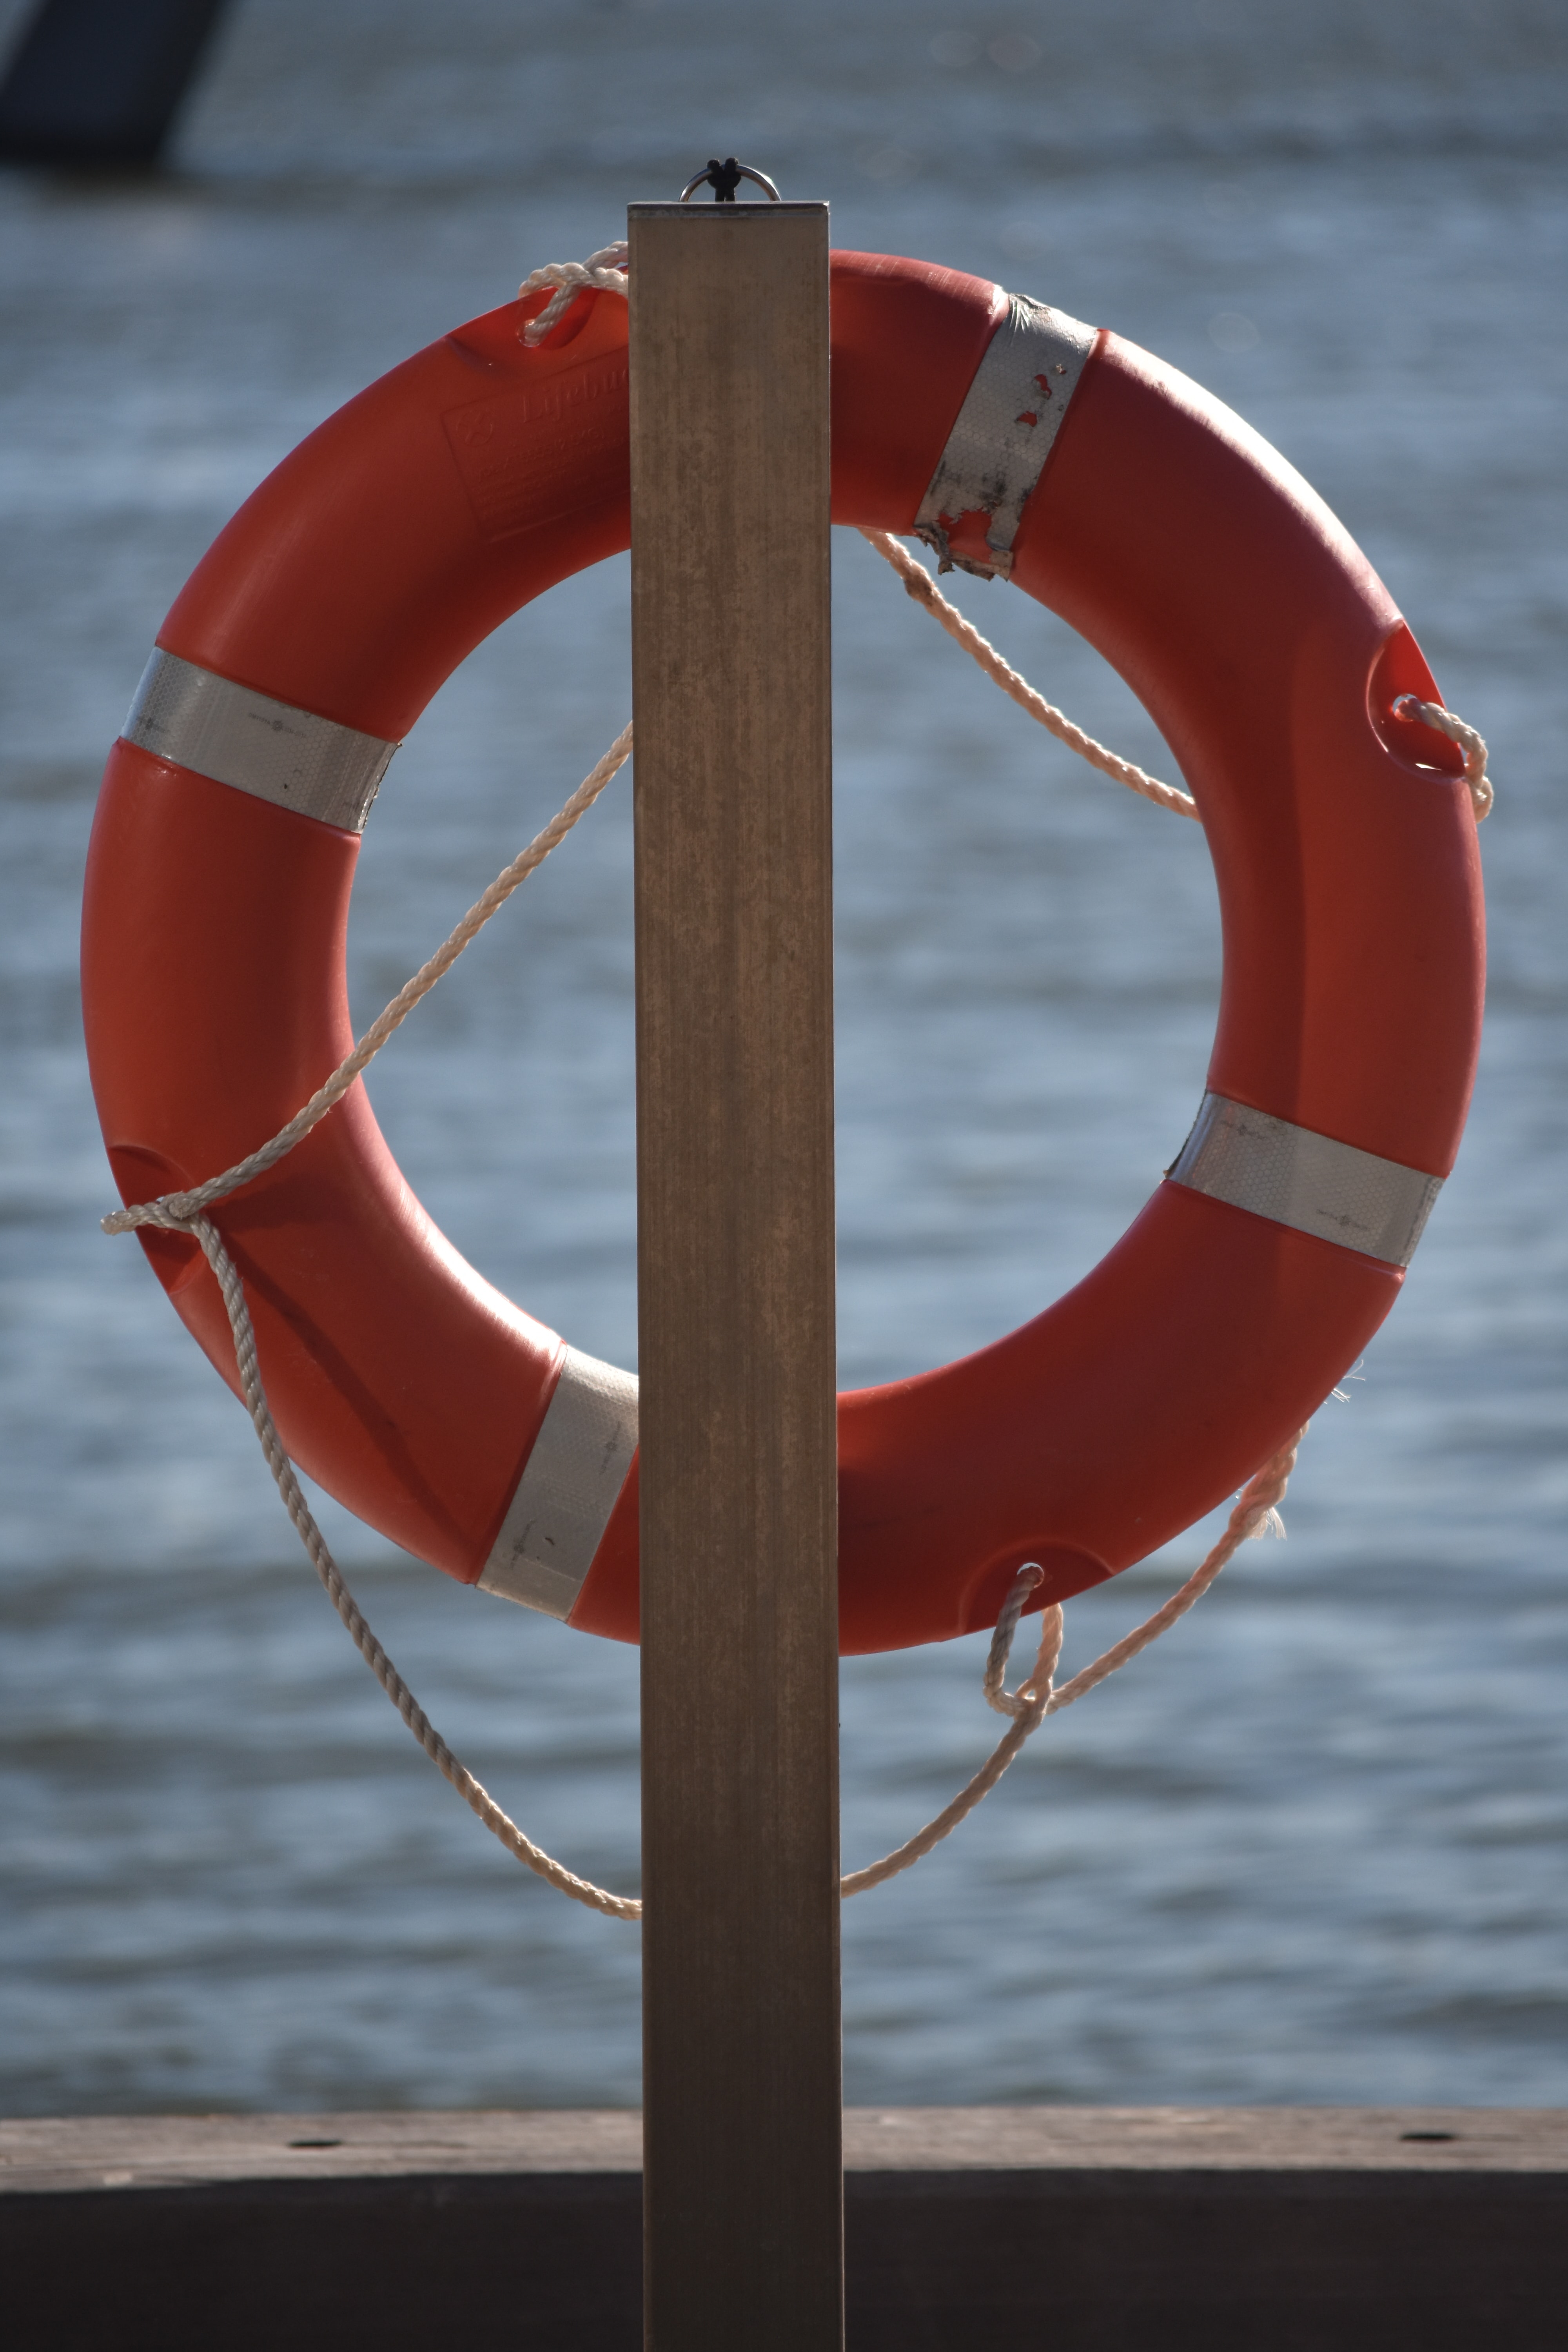 Fatal Washington County Boating Accident